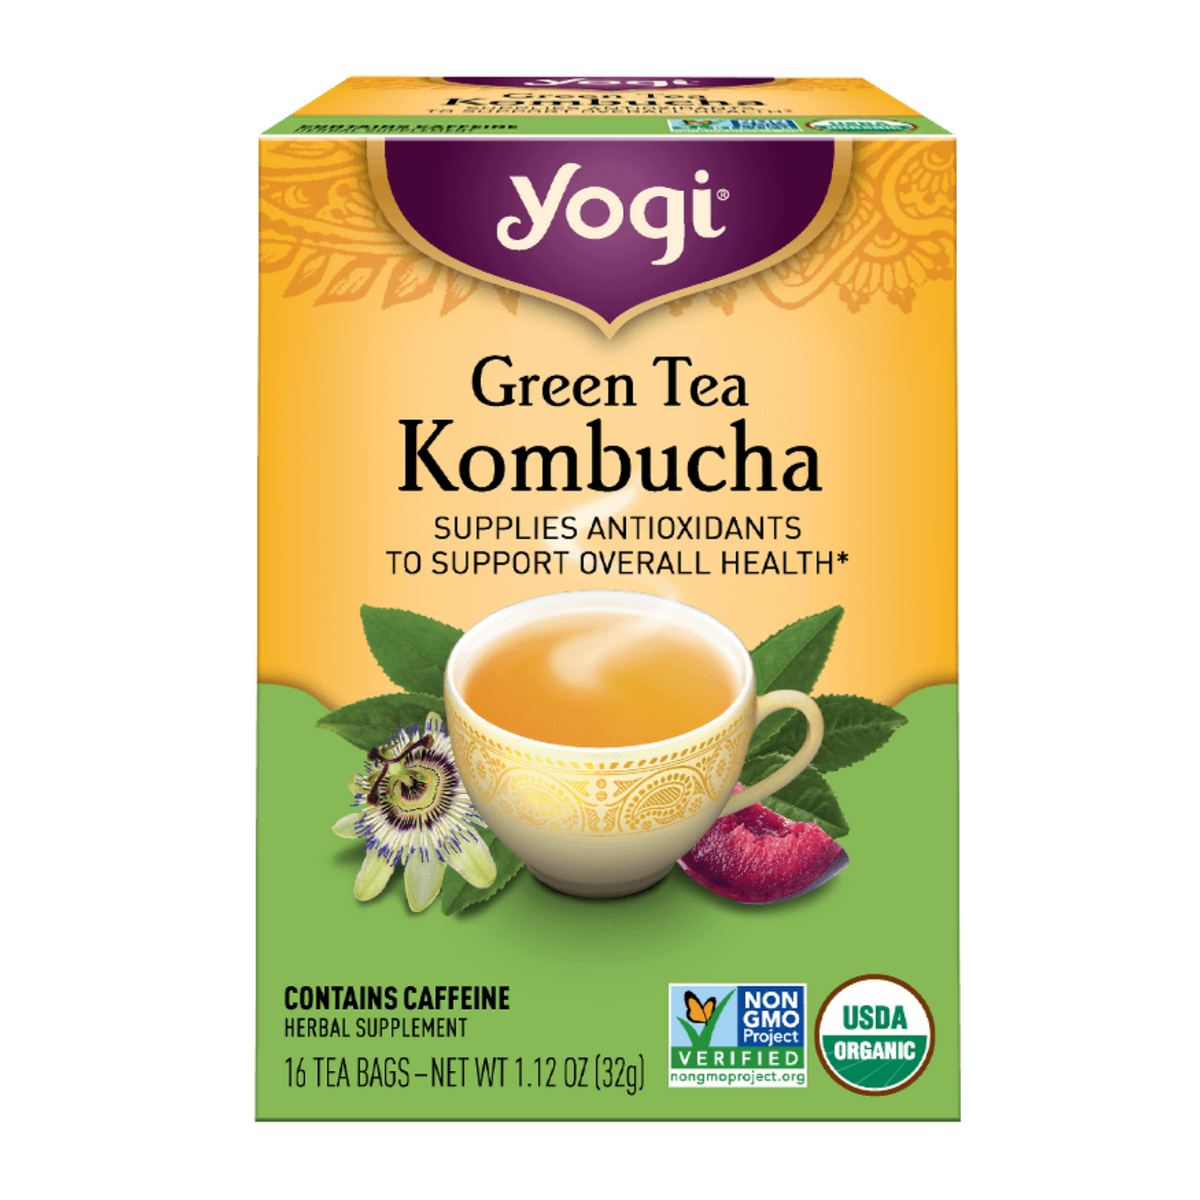 Primary Image of Green Tea Kombucha Tea Bags